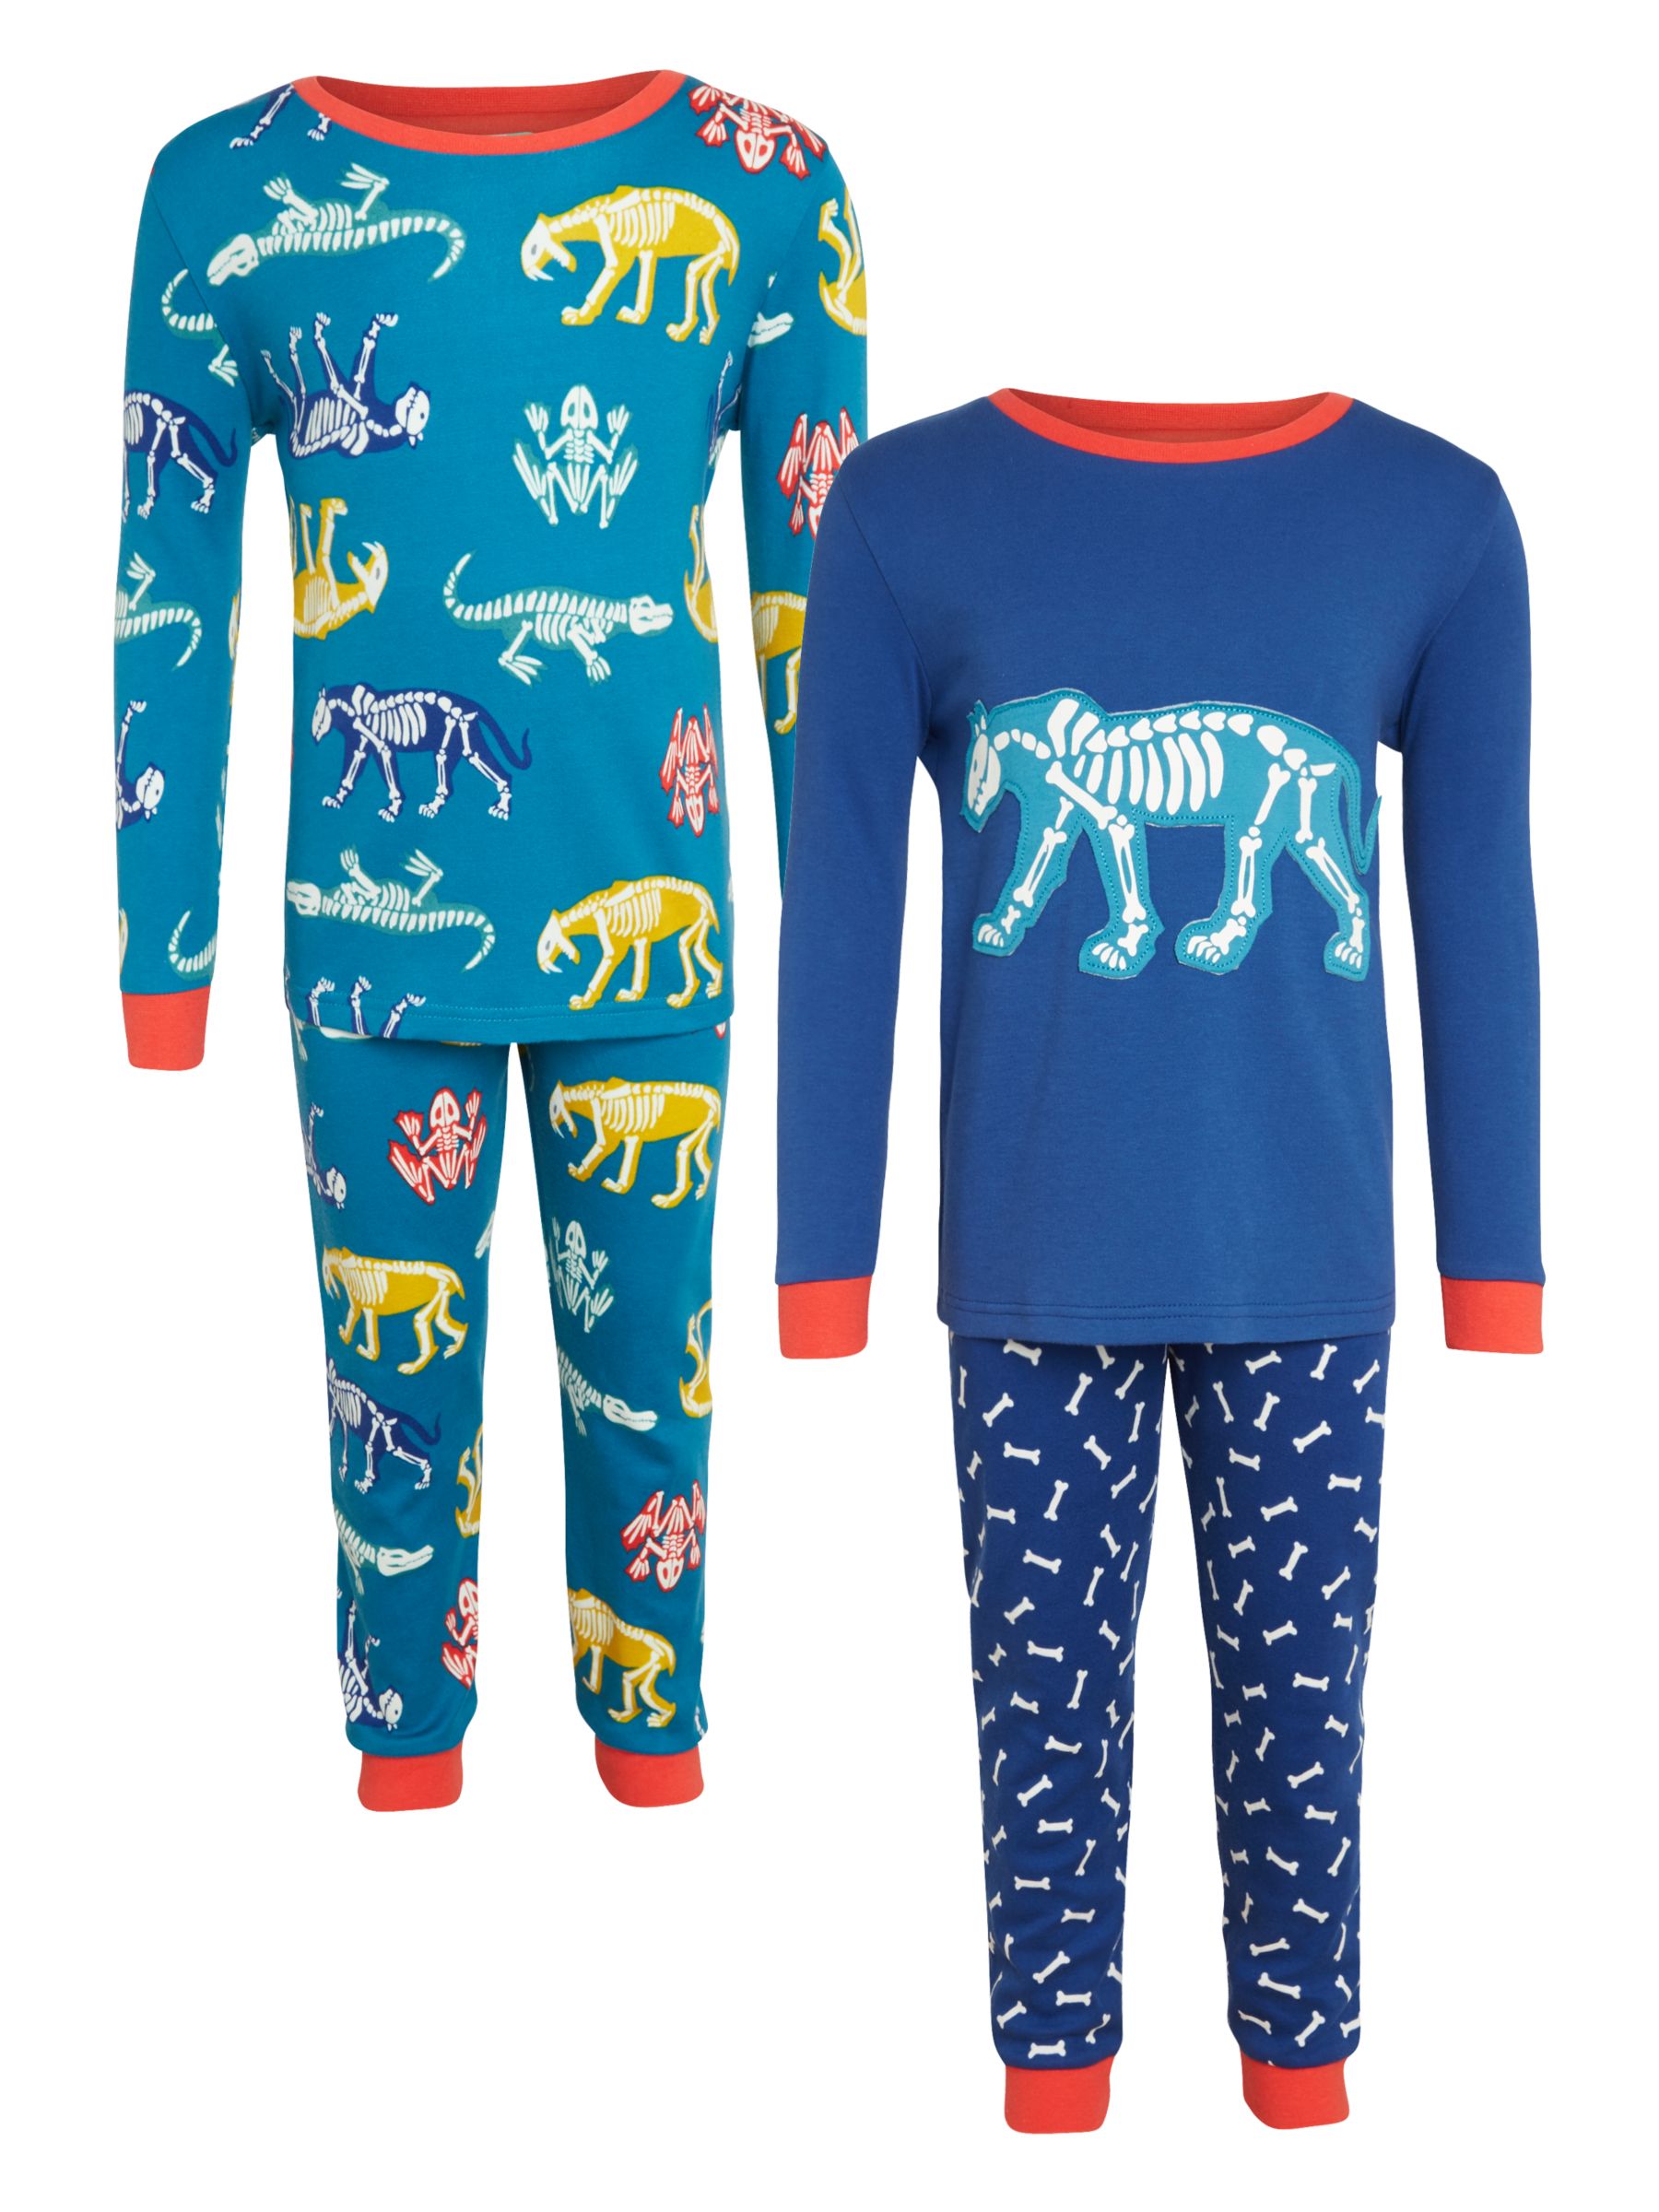 John Lewis & Partners Children's Glow In The Dark Animal Skeleton Pyjamas, Pack of 2, Blue/Multi